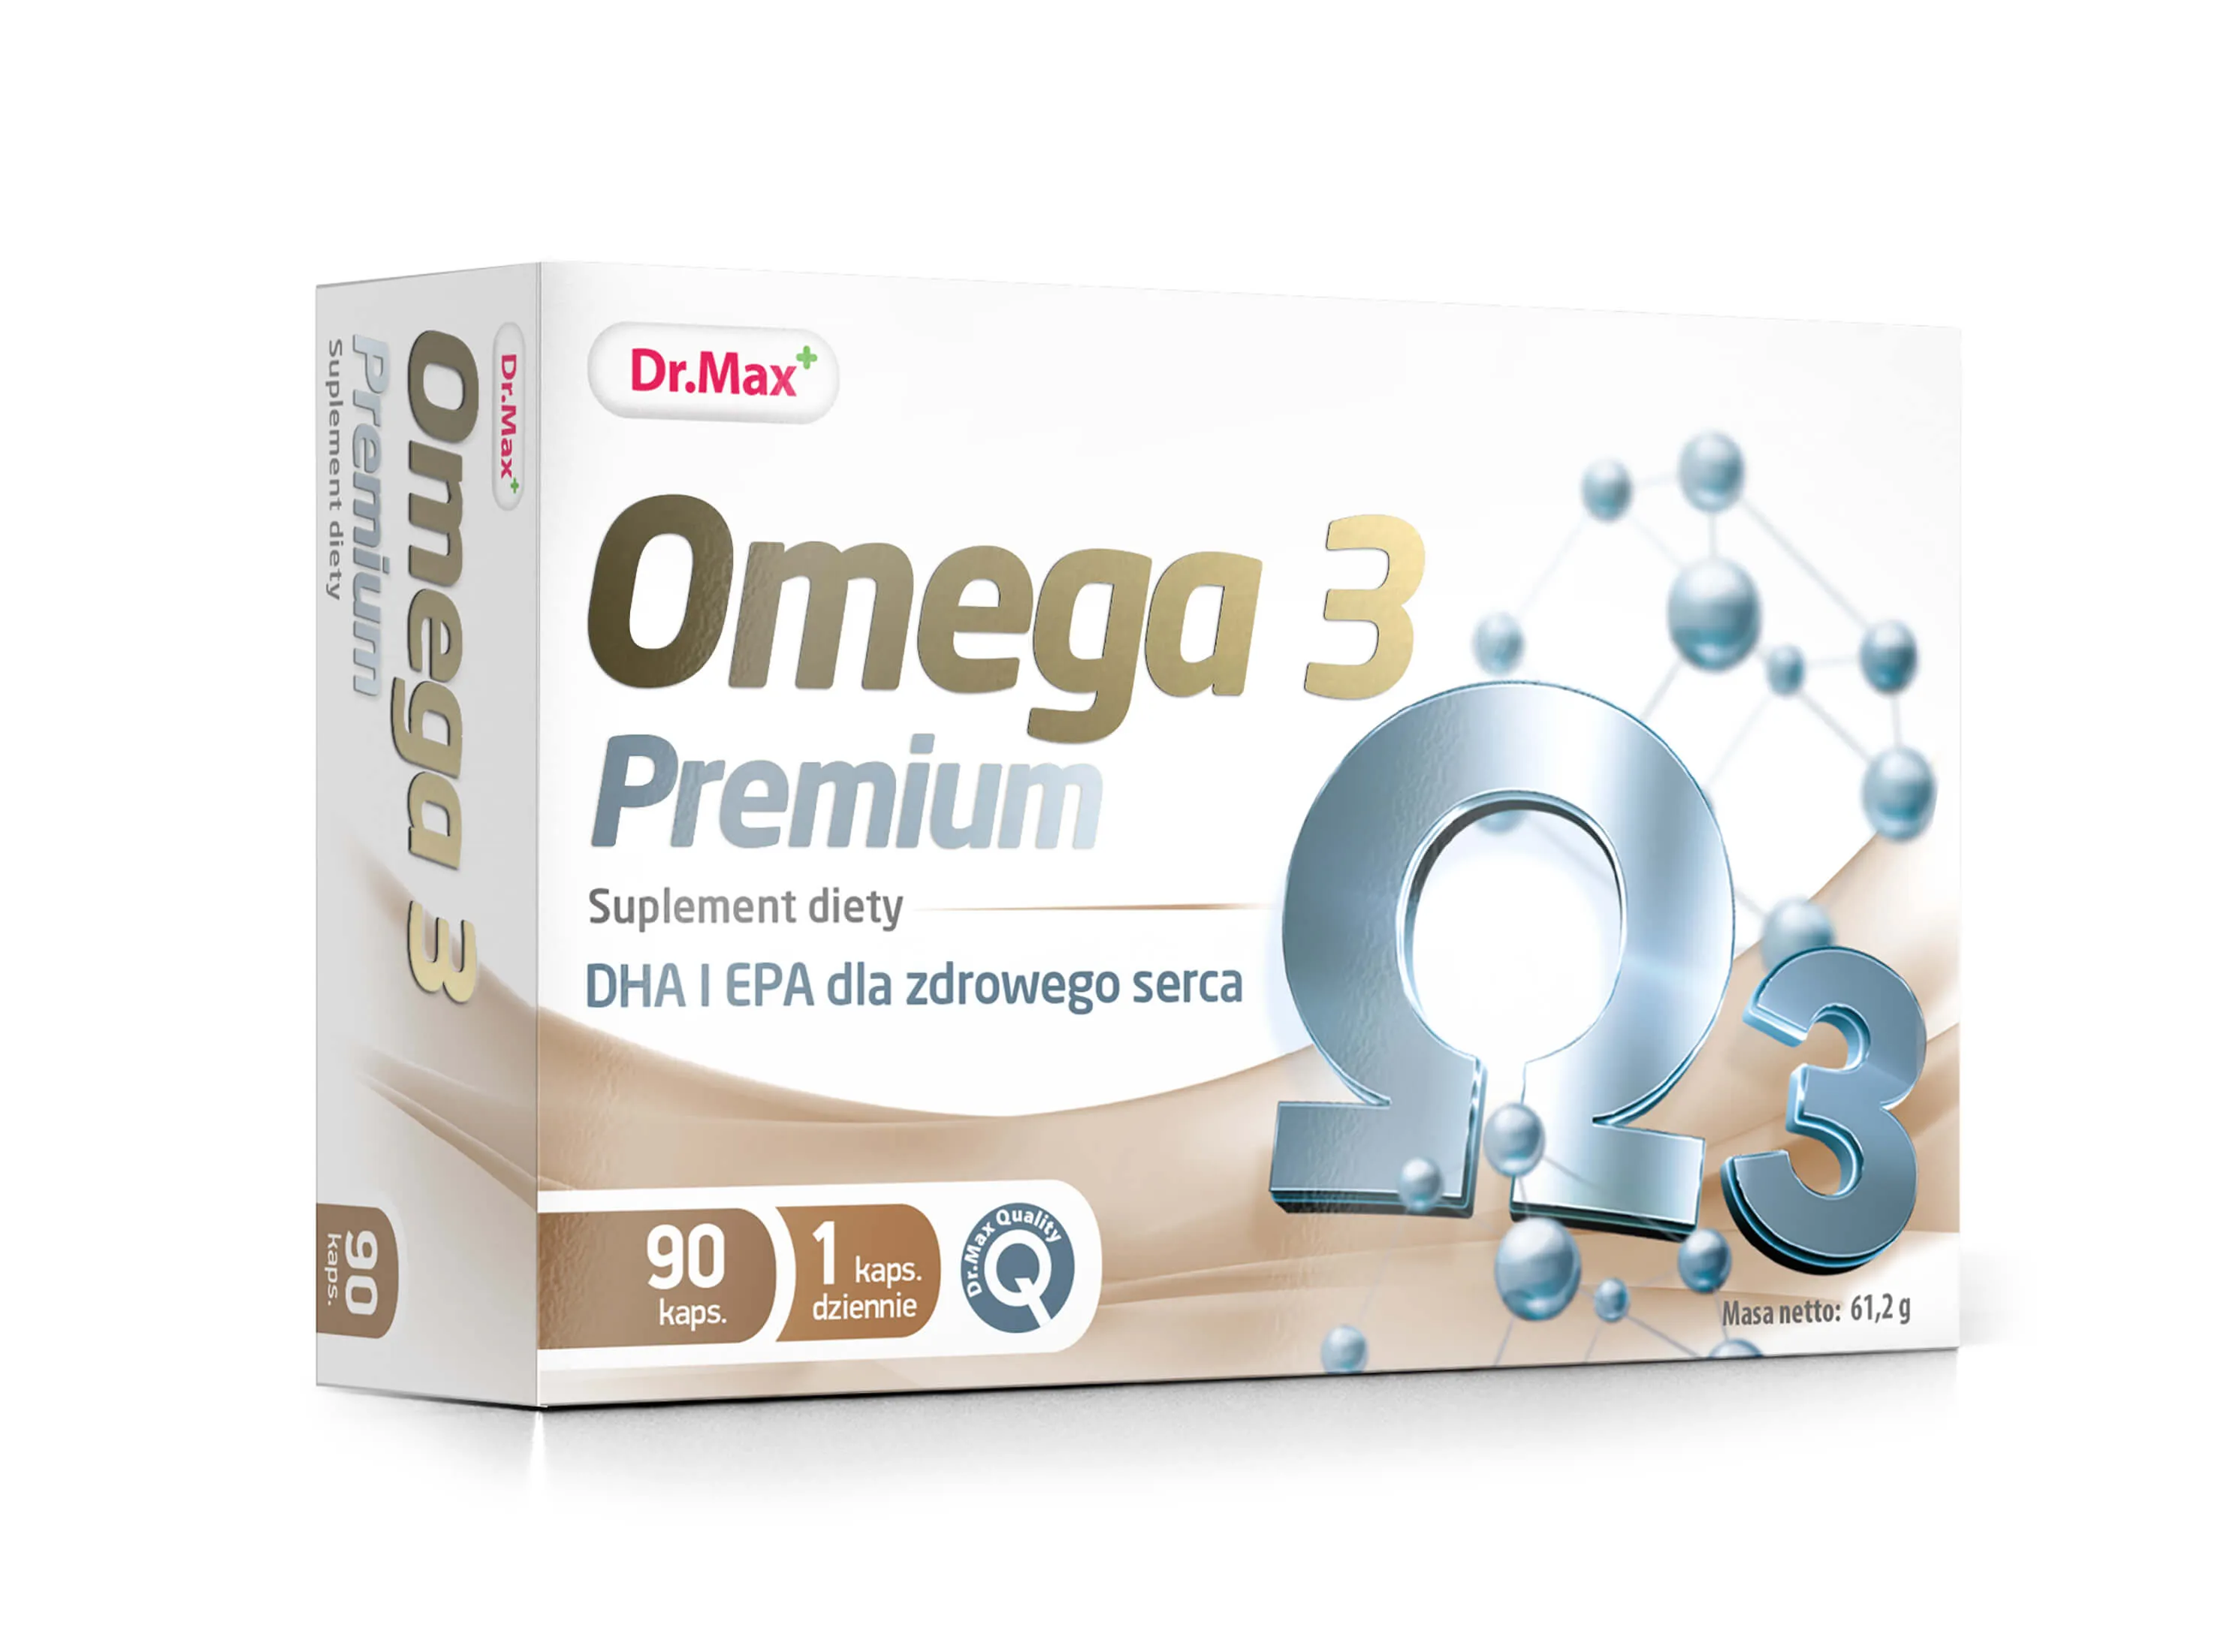 Omega 3 Premium Dr.Max, suplement diety, 90 kapsułek